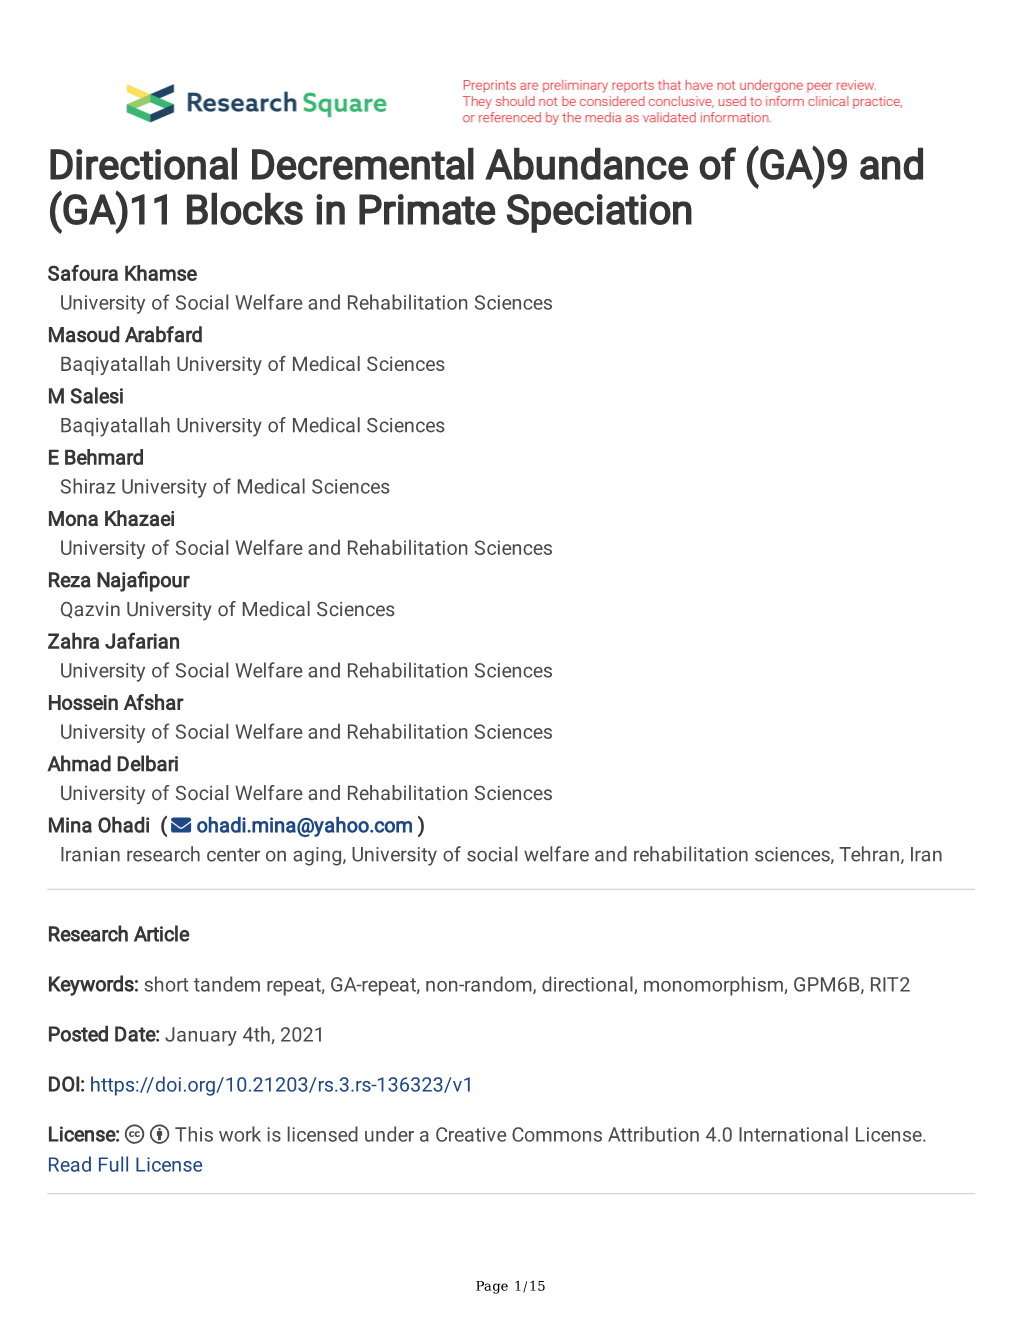 Directional Decremental Abundance of (GA)9 and (GA)11 Blocks in Primate Speciation